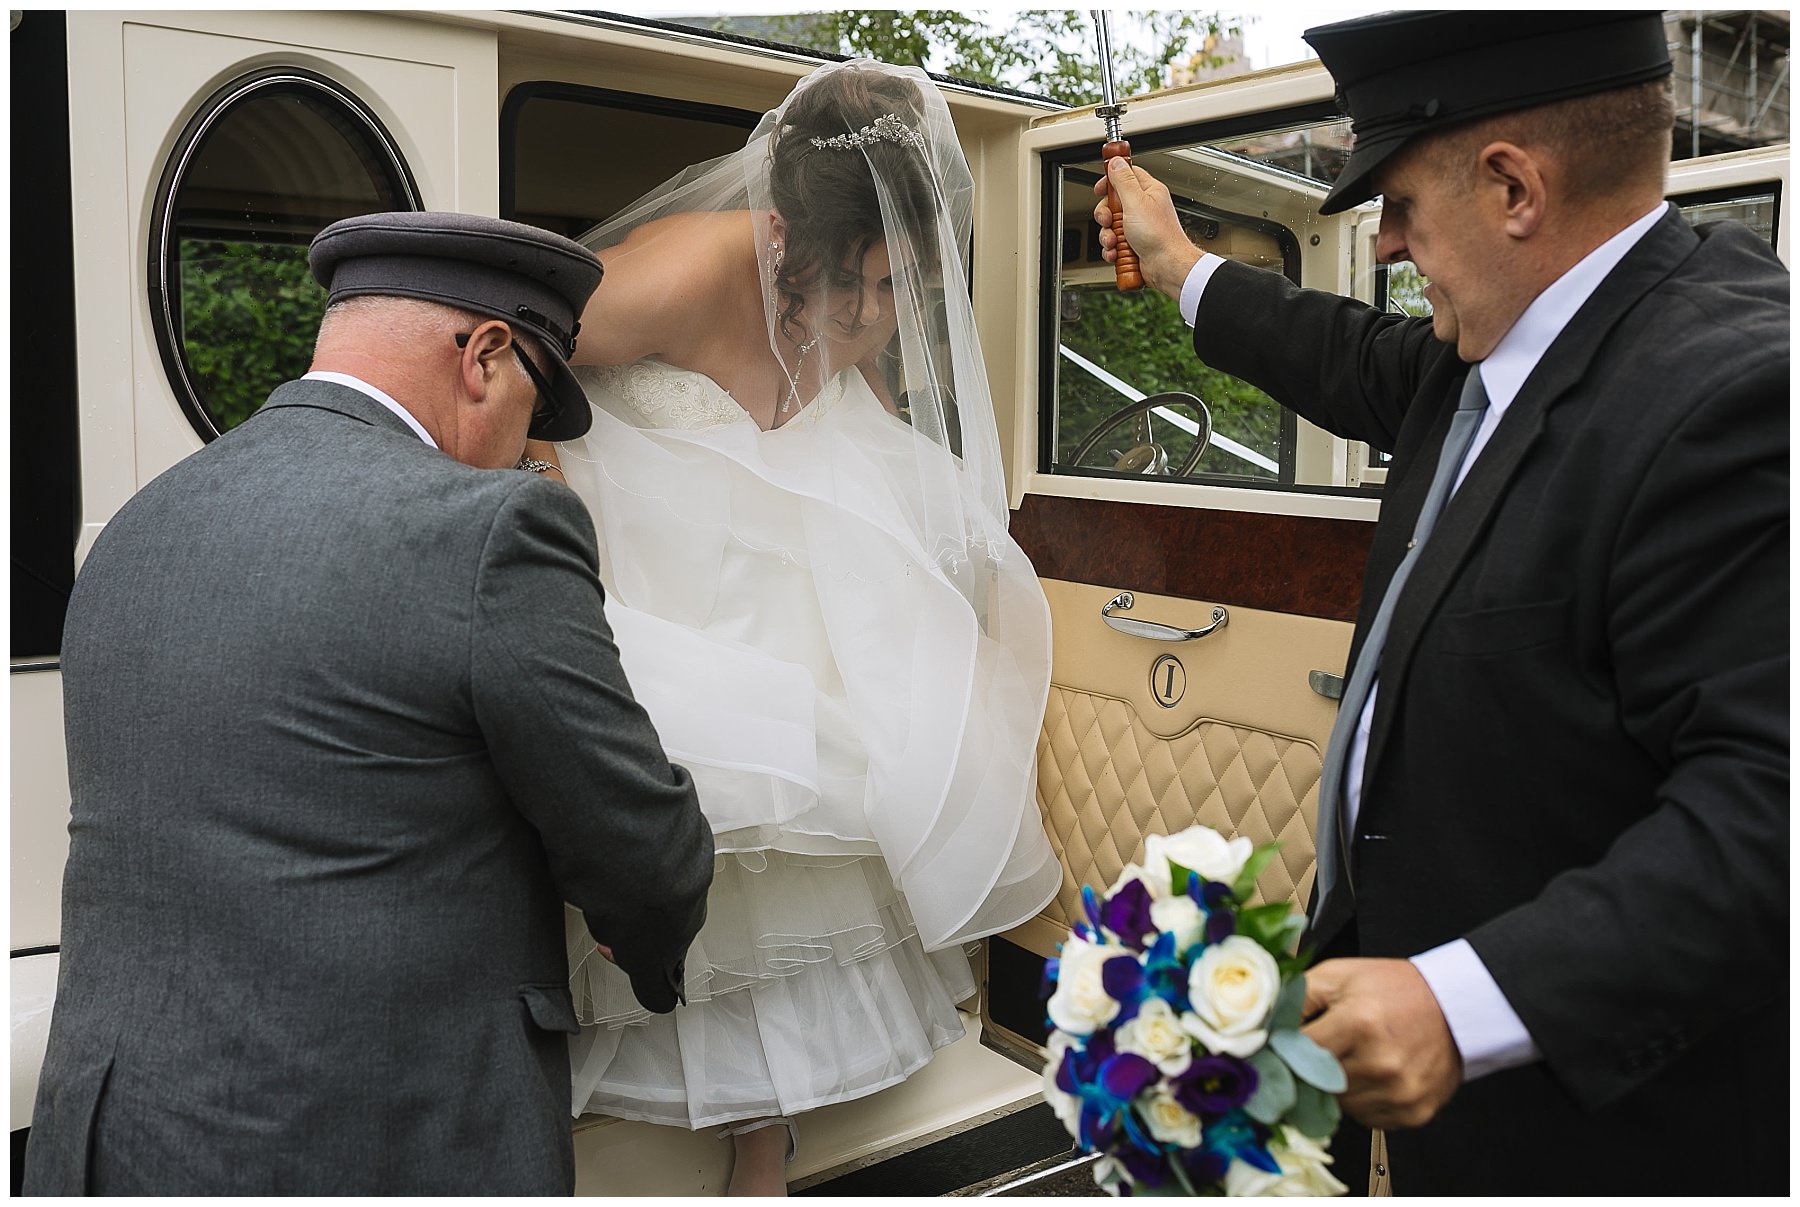 bride arrives at church in classic wedding car